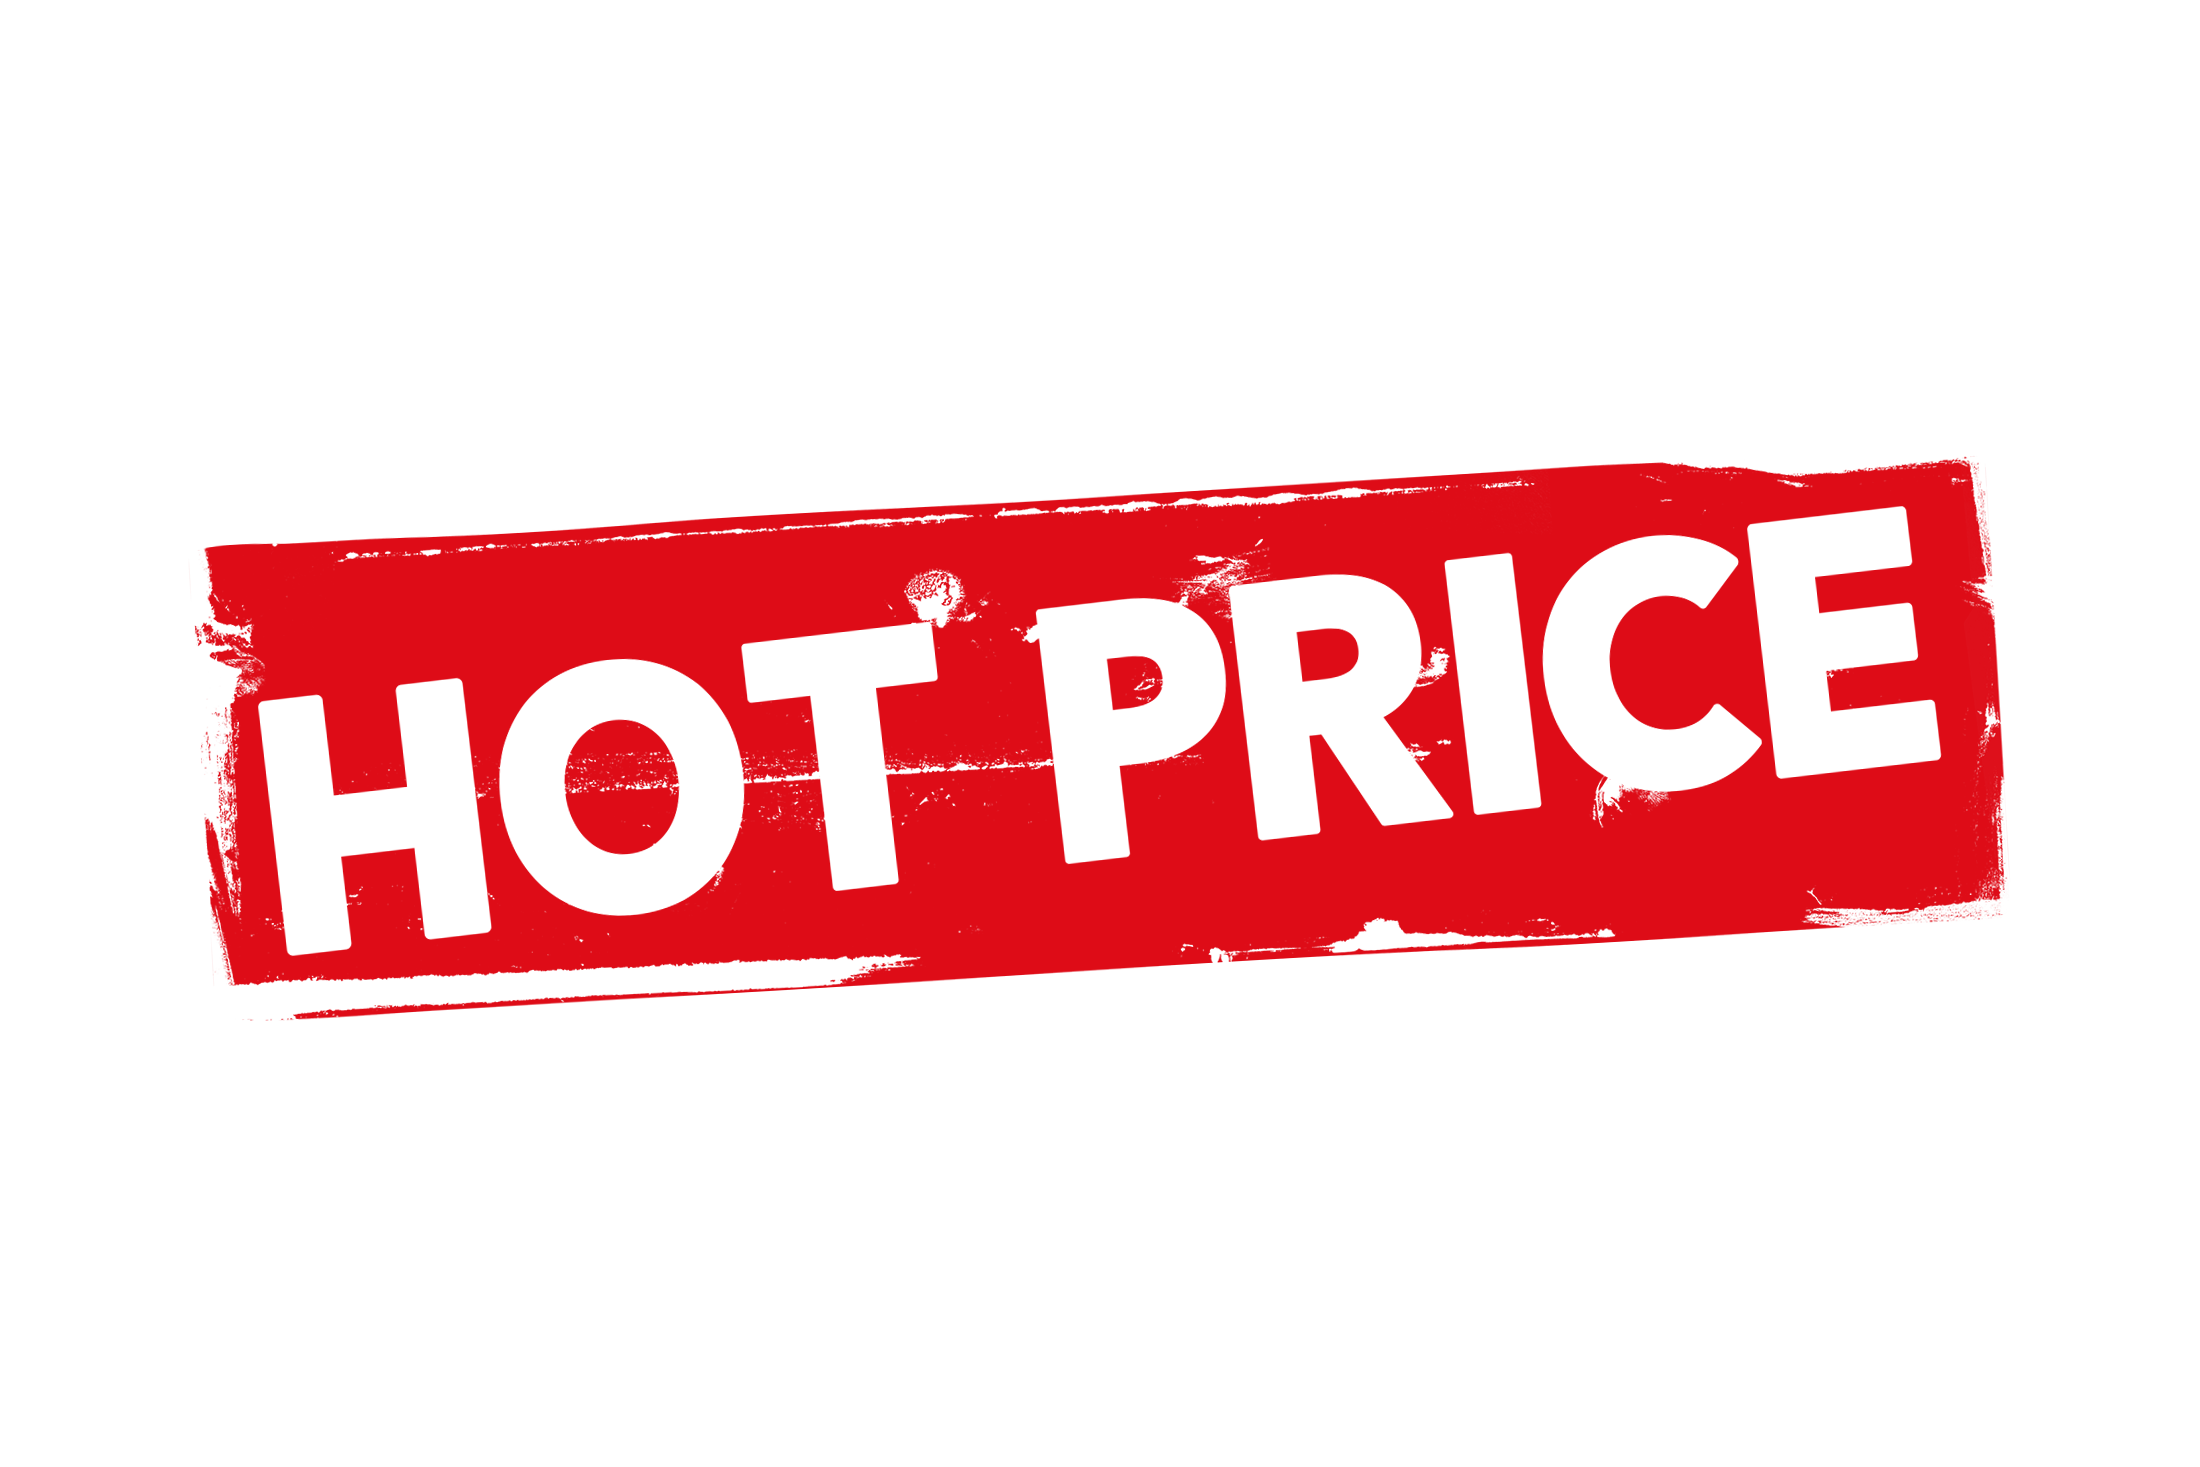 Grunge hot price label PSD - PSDstamps